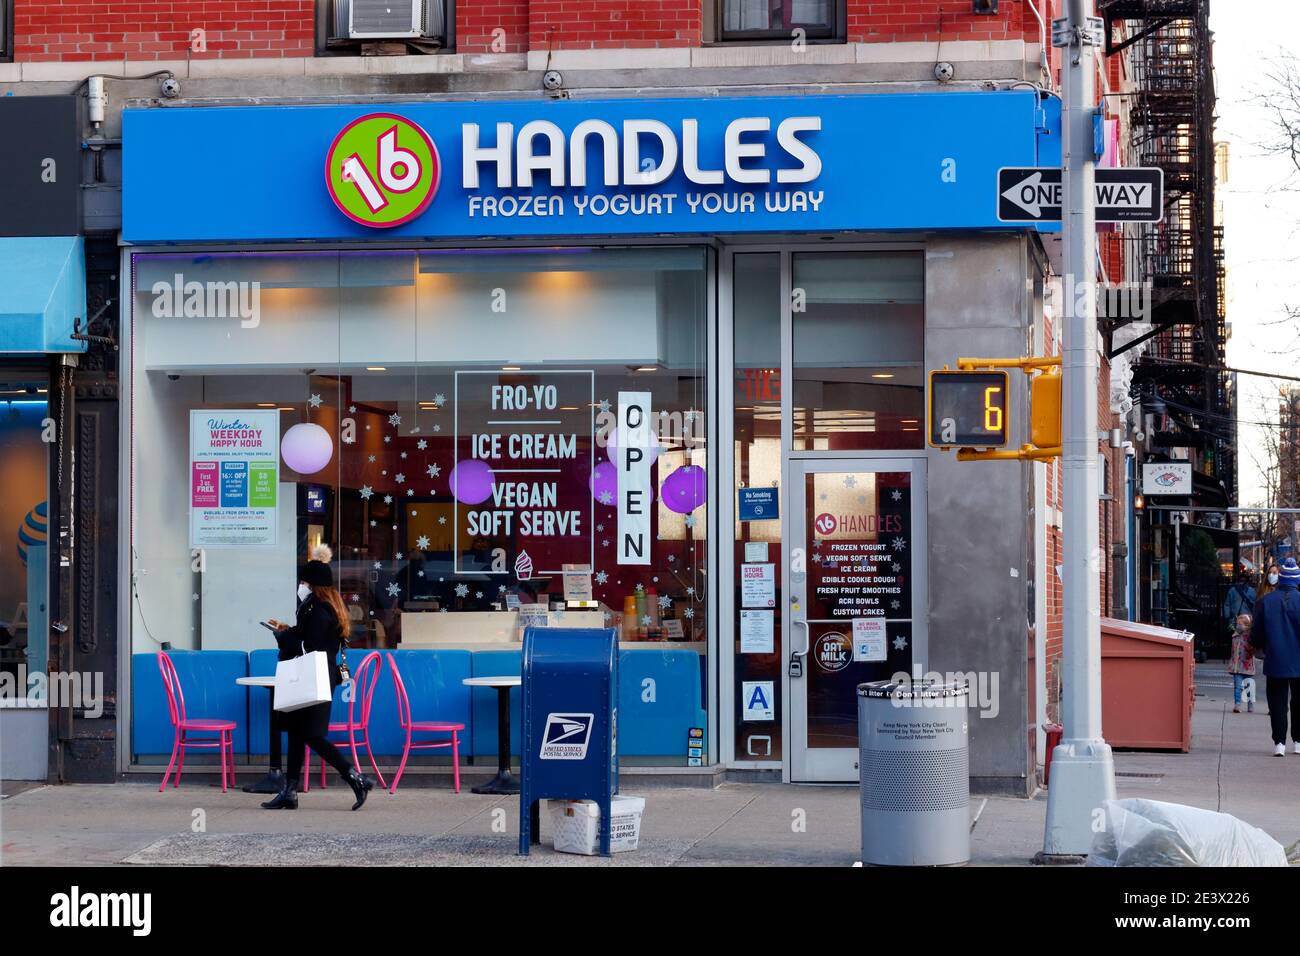 https://c8.alamy.com/comp/2E3X226/16-handles-178-8th-ave-new-york-nyc-storefront-photo-of-a-frozen-yogurt-shop-in-manhattans-chelsea-neighborhood-2E3X226.jpg